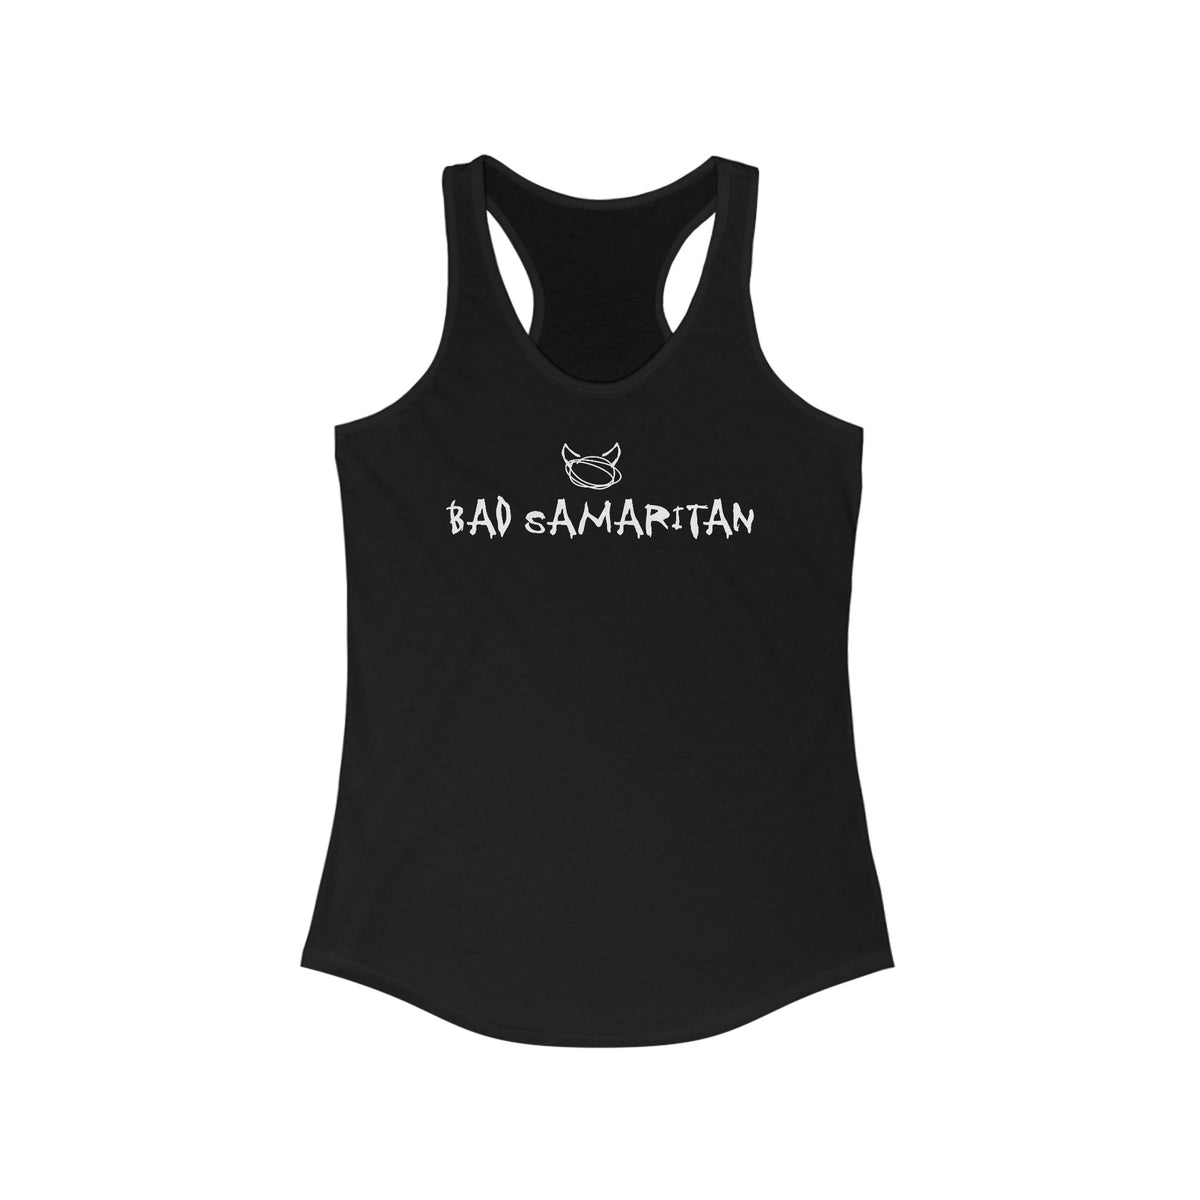 Bad Samaritan - Women's Racerback Tank